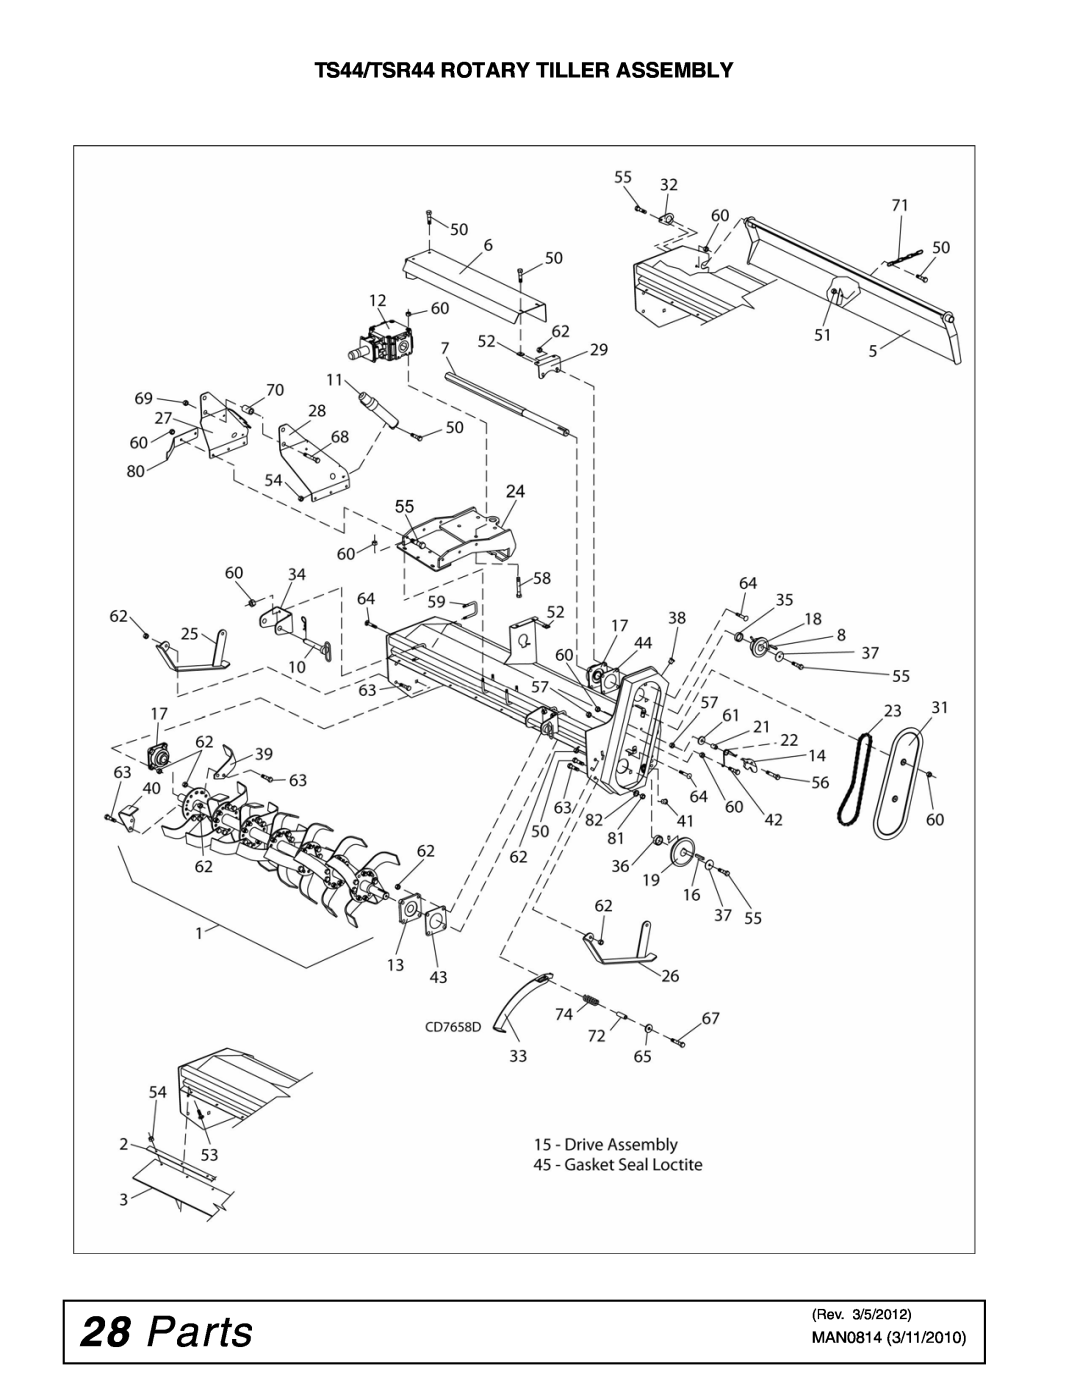 Woods Equipment TS52 manual Parts, TS44/TSR44 ROTARY TILLER ASSEMBLY 